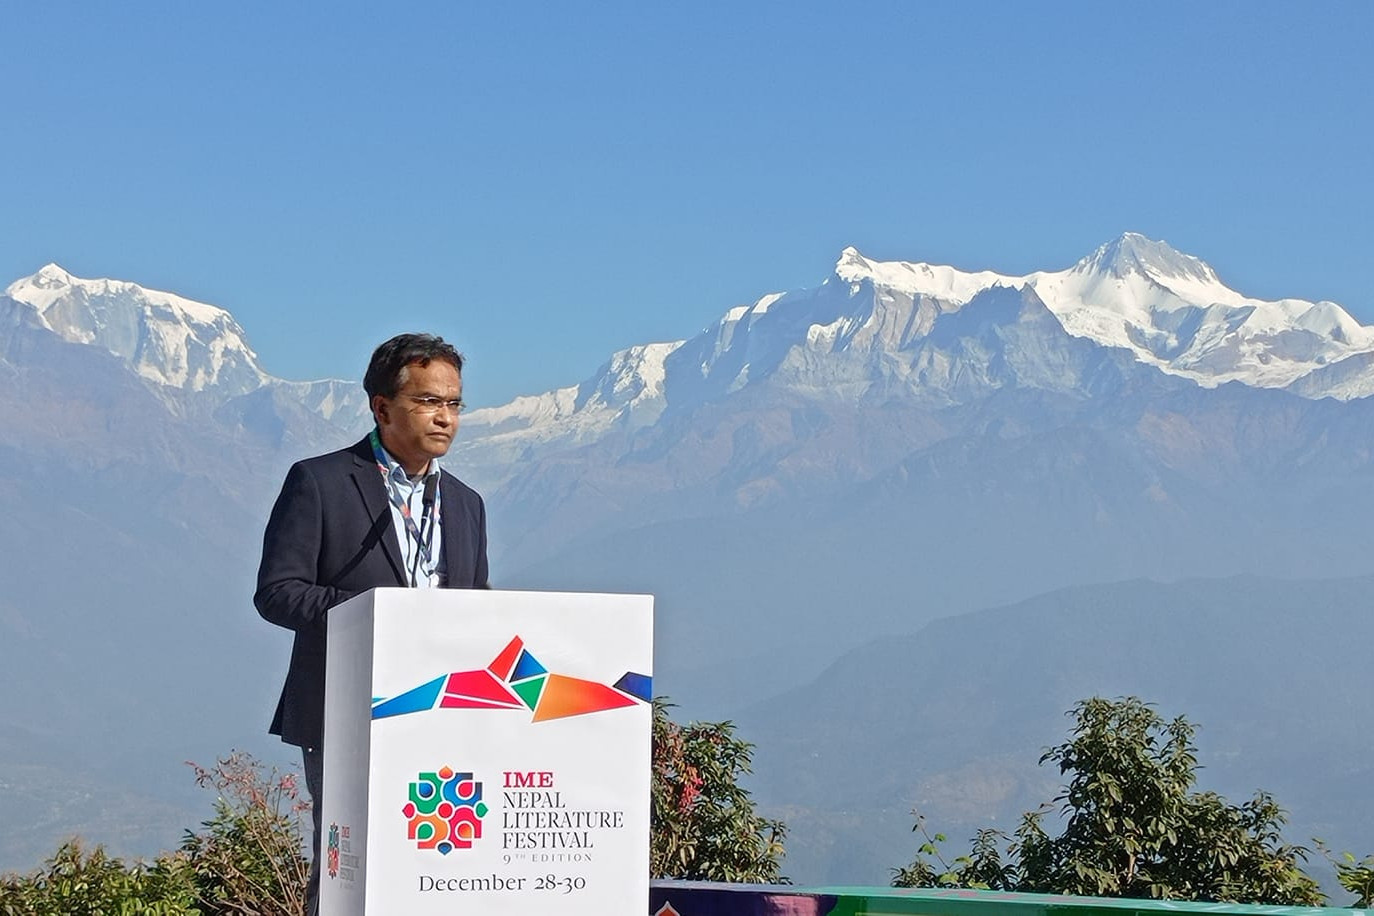 डा.विश्व पौडेलले पोखरामा आयोजित नवौं नेपाल साहित्य महोत्सवको ‘साहित्यको अर्थ’ शीर्षकमा मन्तव्य दिदैं । फाेटाे: सामाजिक सञ्जाल